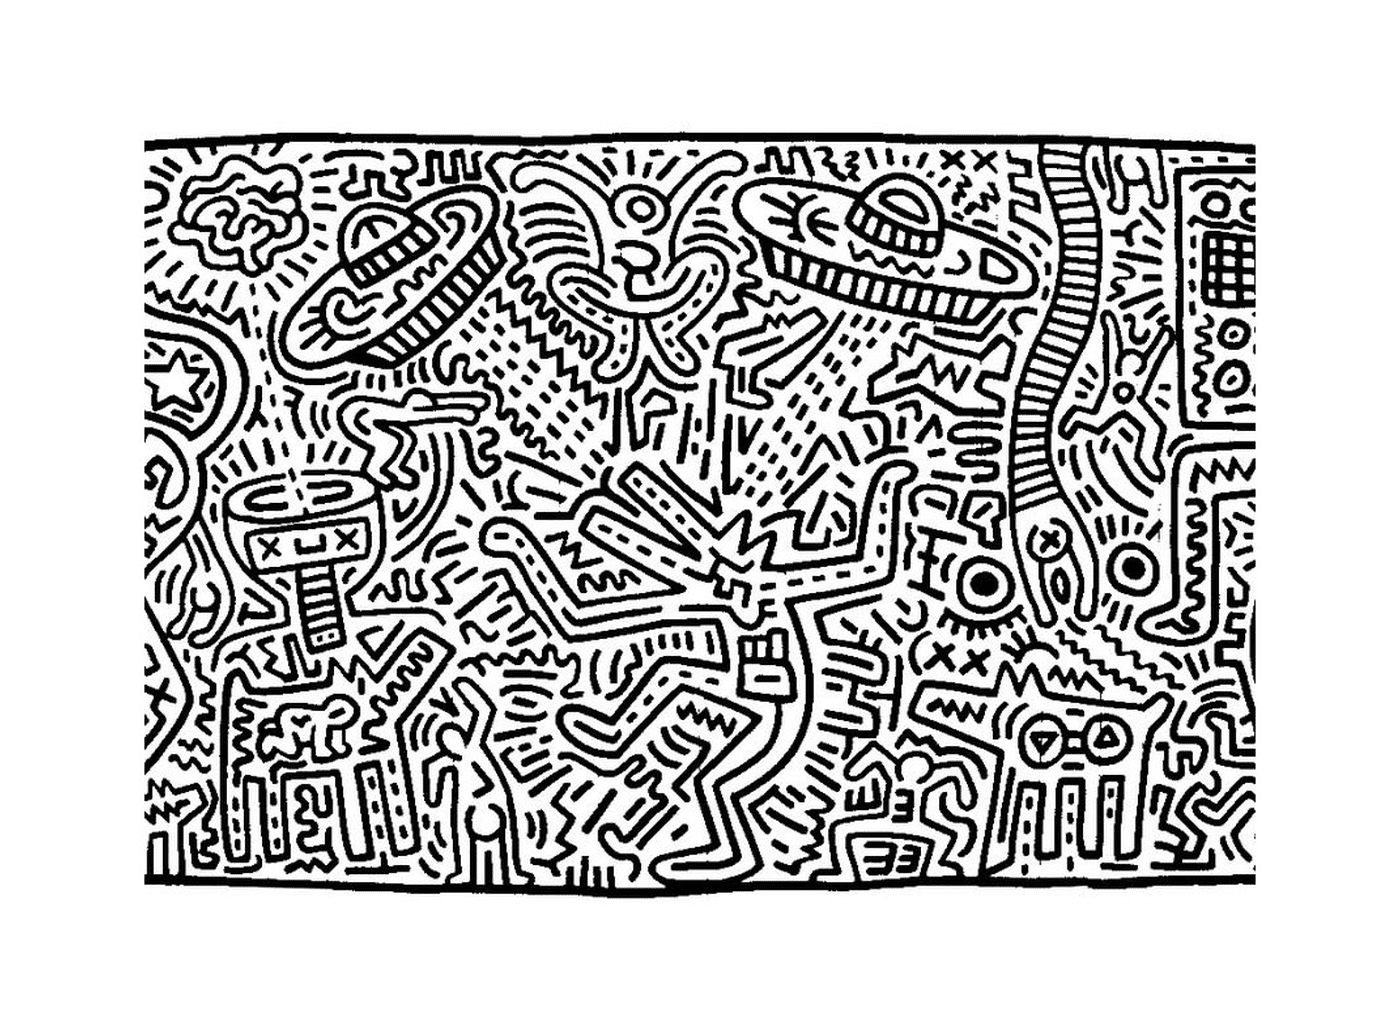  un'opera d'arte di Keith Haring 